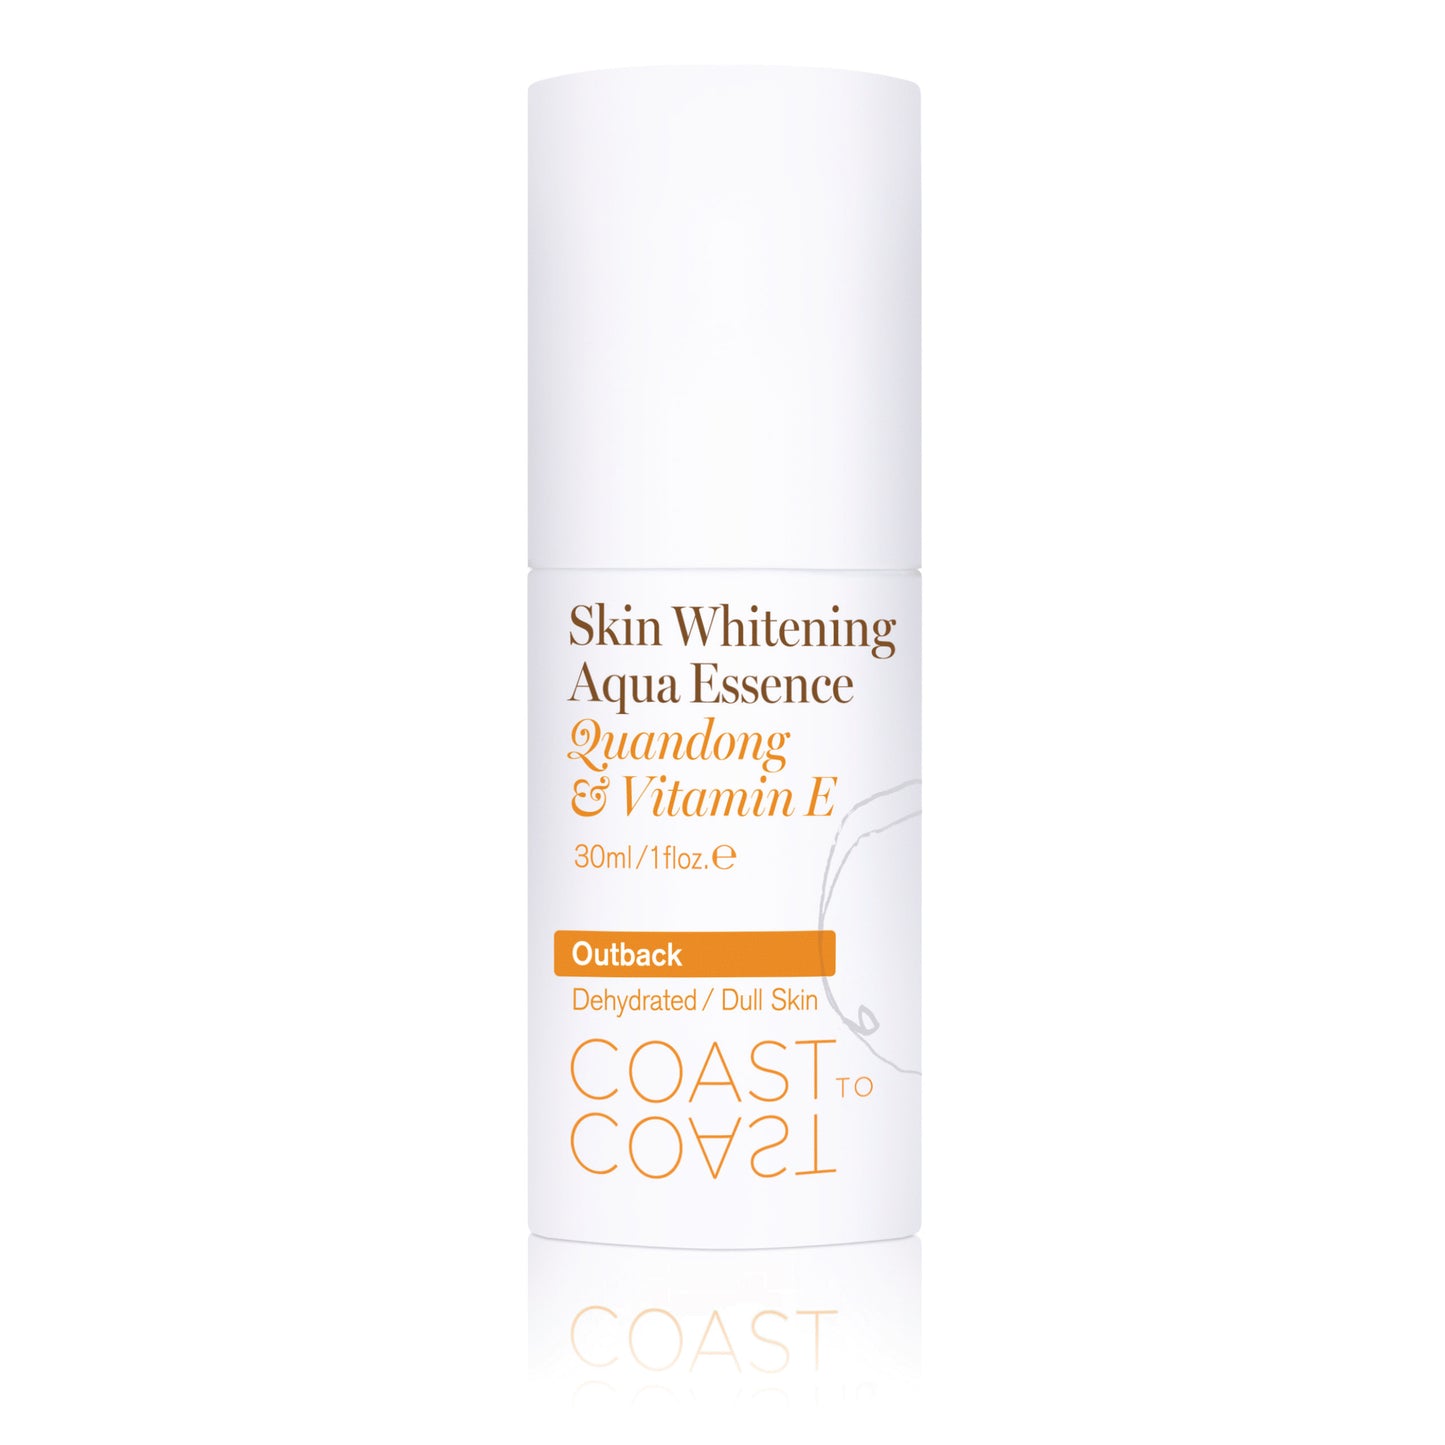 Skin Whitening Aqua Essence